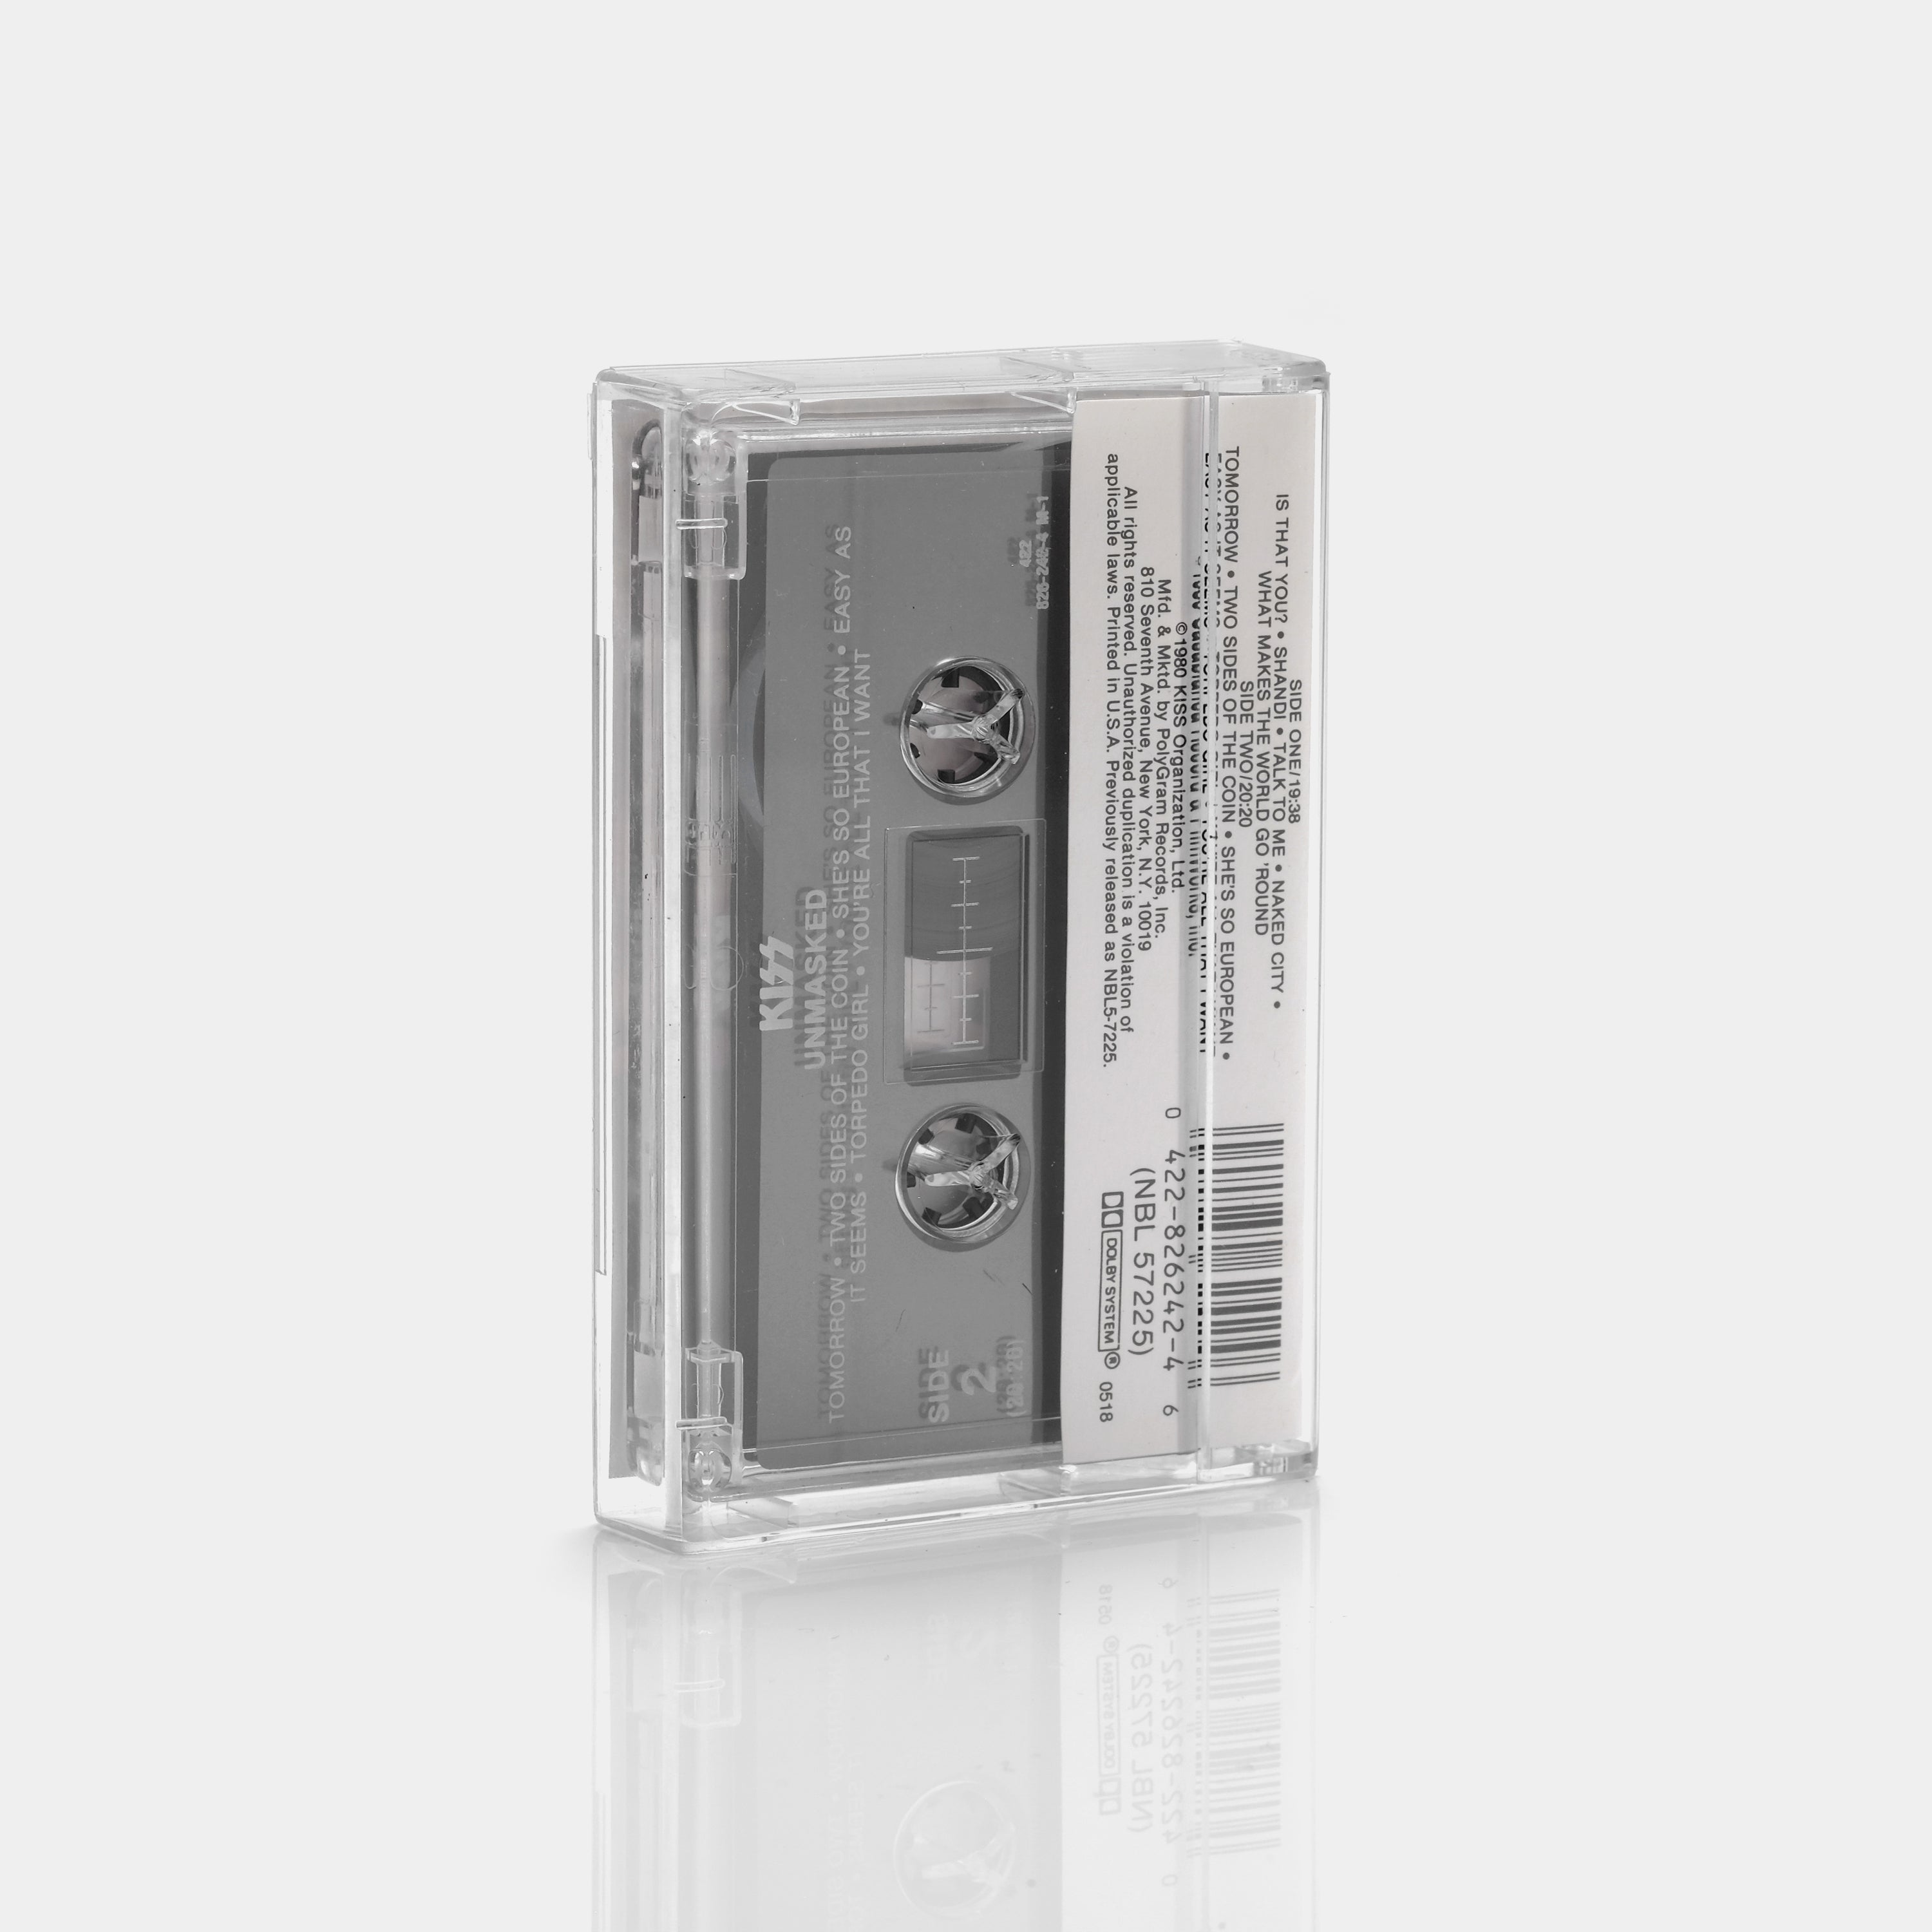 KISS - Unmasked Cassette Tape